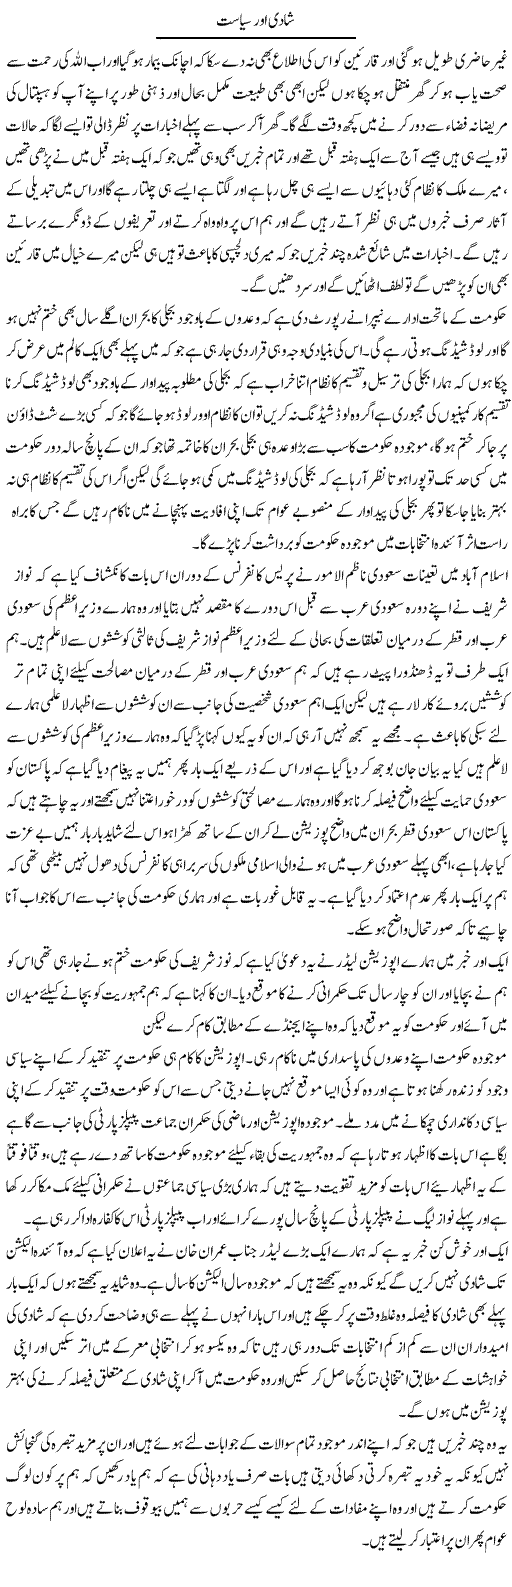 Shadi Aur Siasat | Abdul Qadir Hassan | Daily Urdu Columns